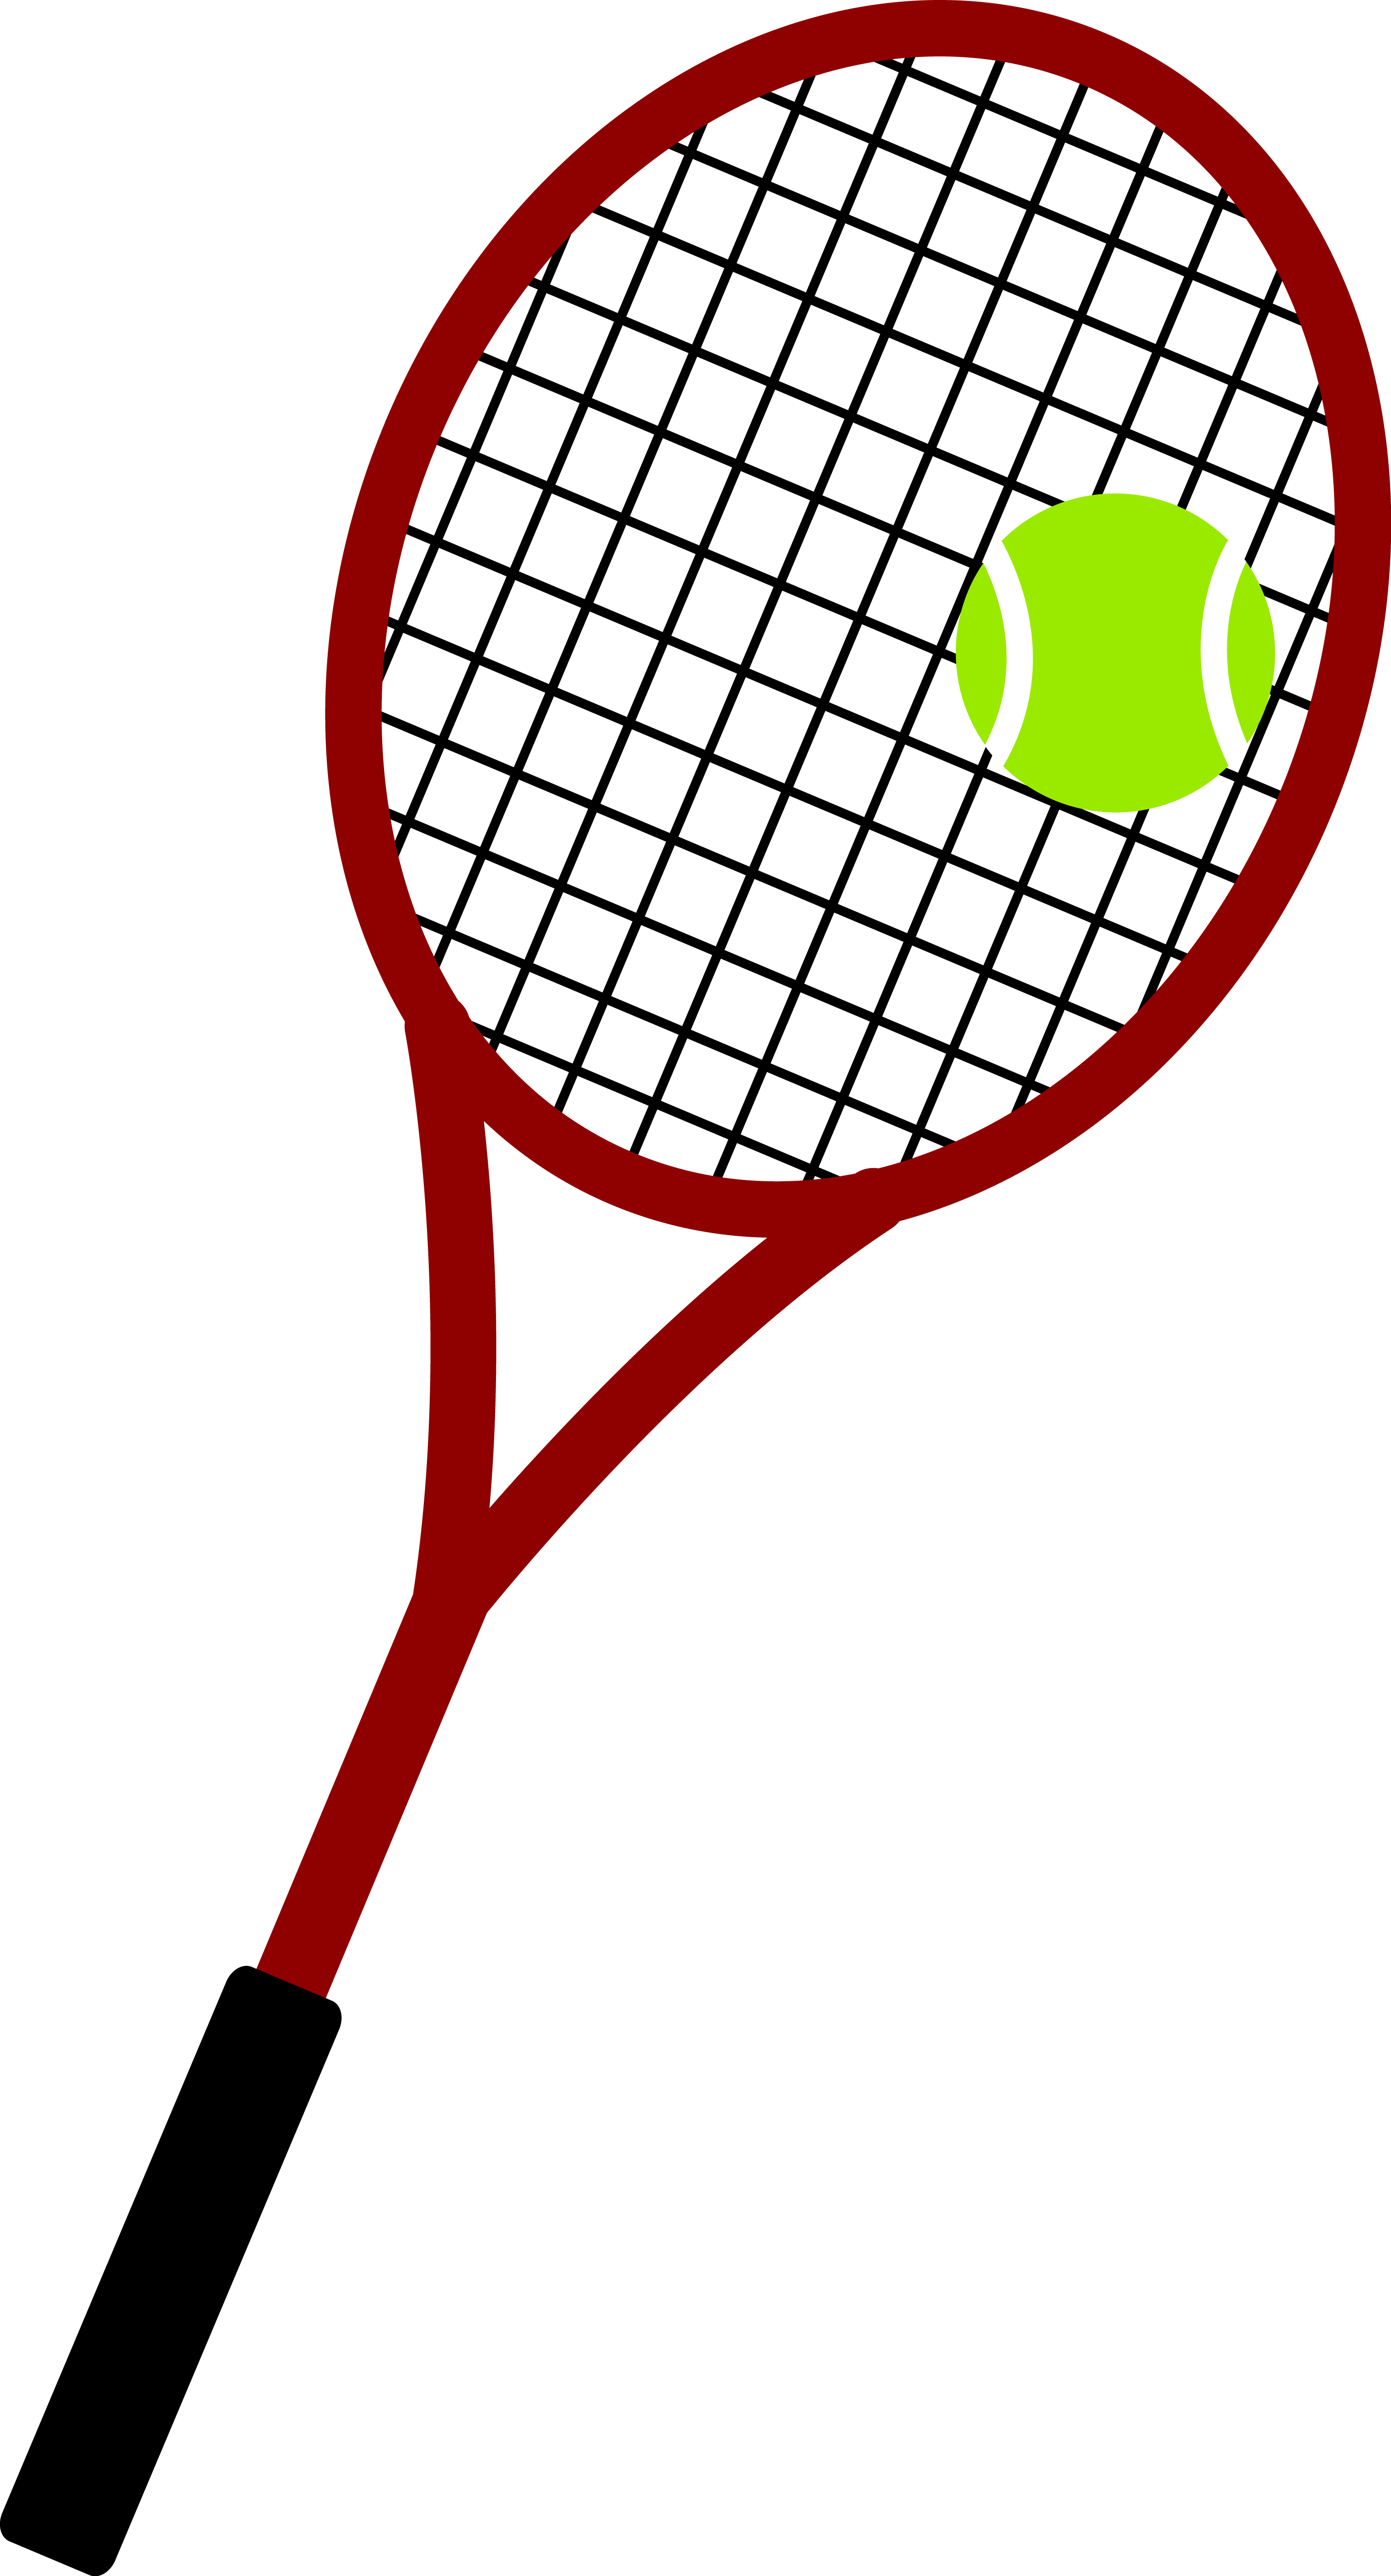 Tennis Cartoon Images - Cliparts.co